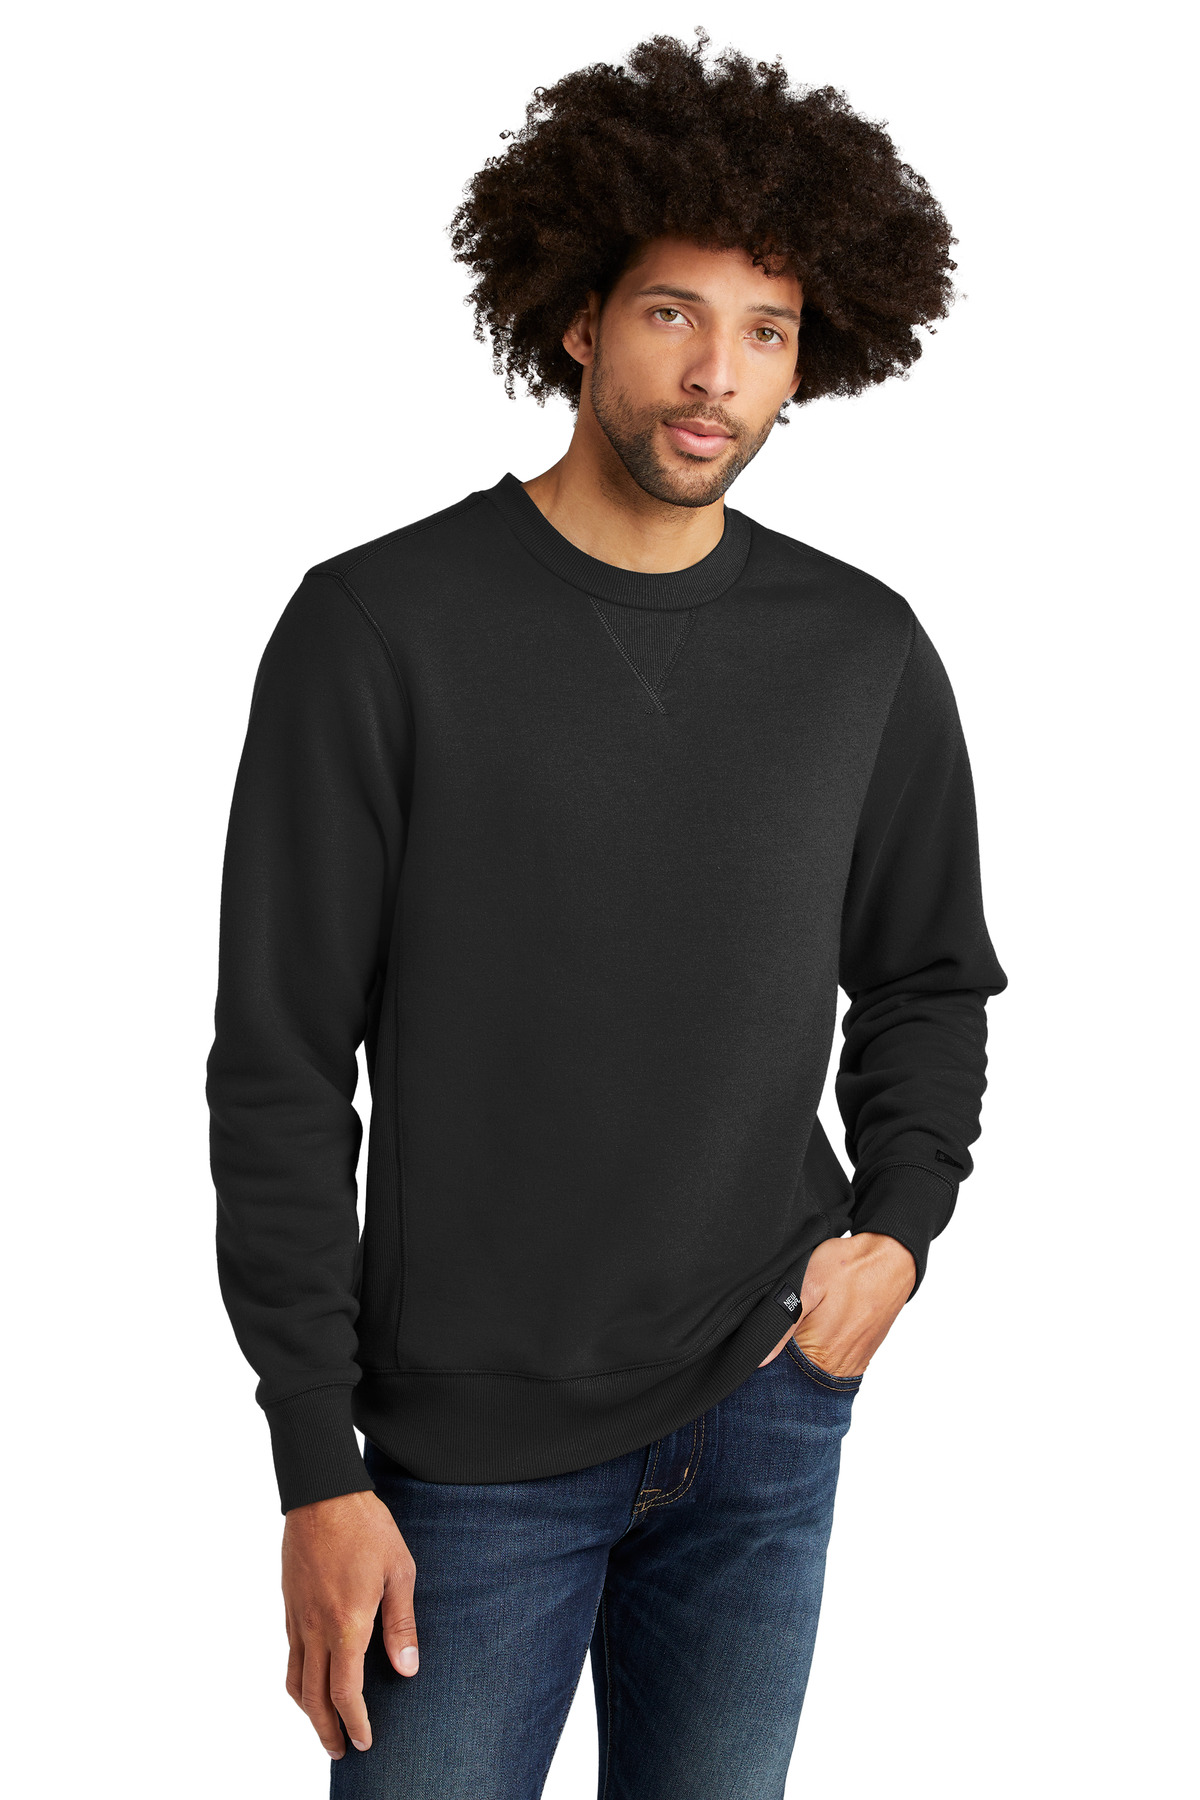 New Era Hospitality Sweatshirts & Fleece ® French Terry Crew.-New Era